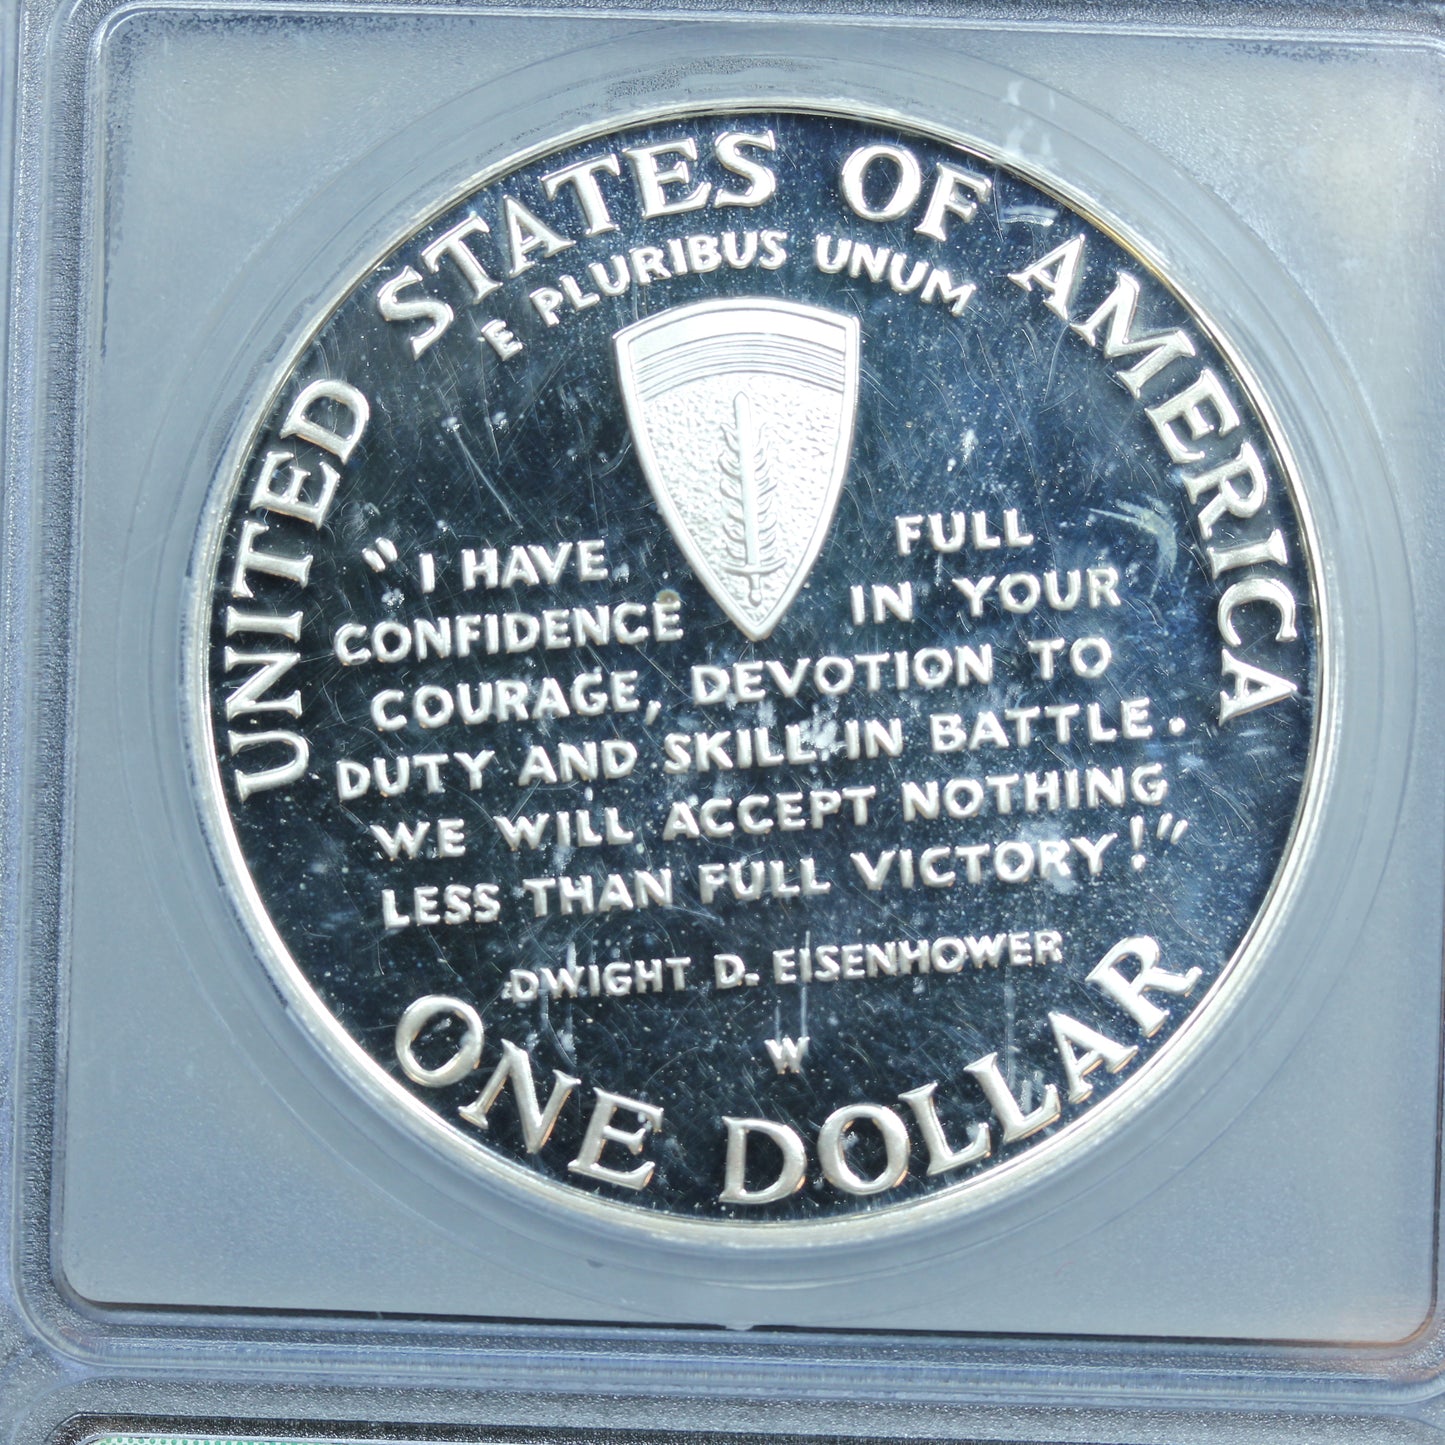 1991-95 W $1 World War II Commemorative Silver $1 - ICG PR70 DCAM